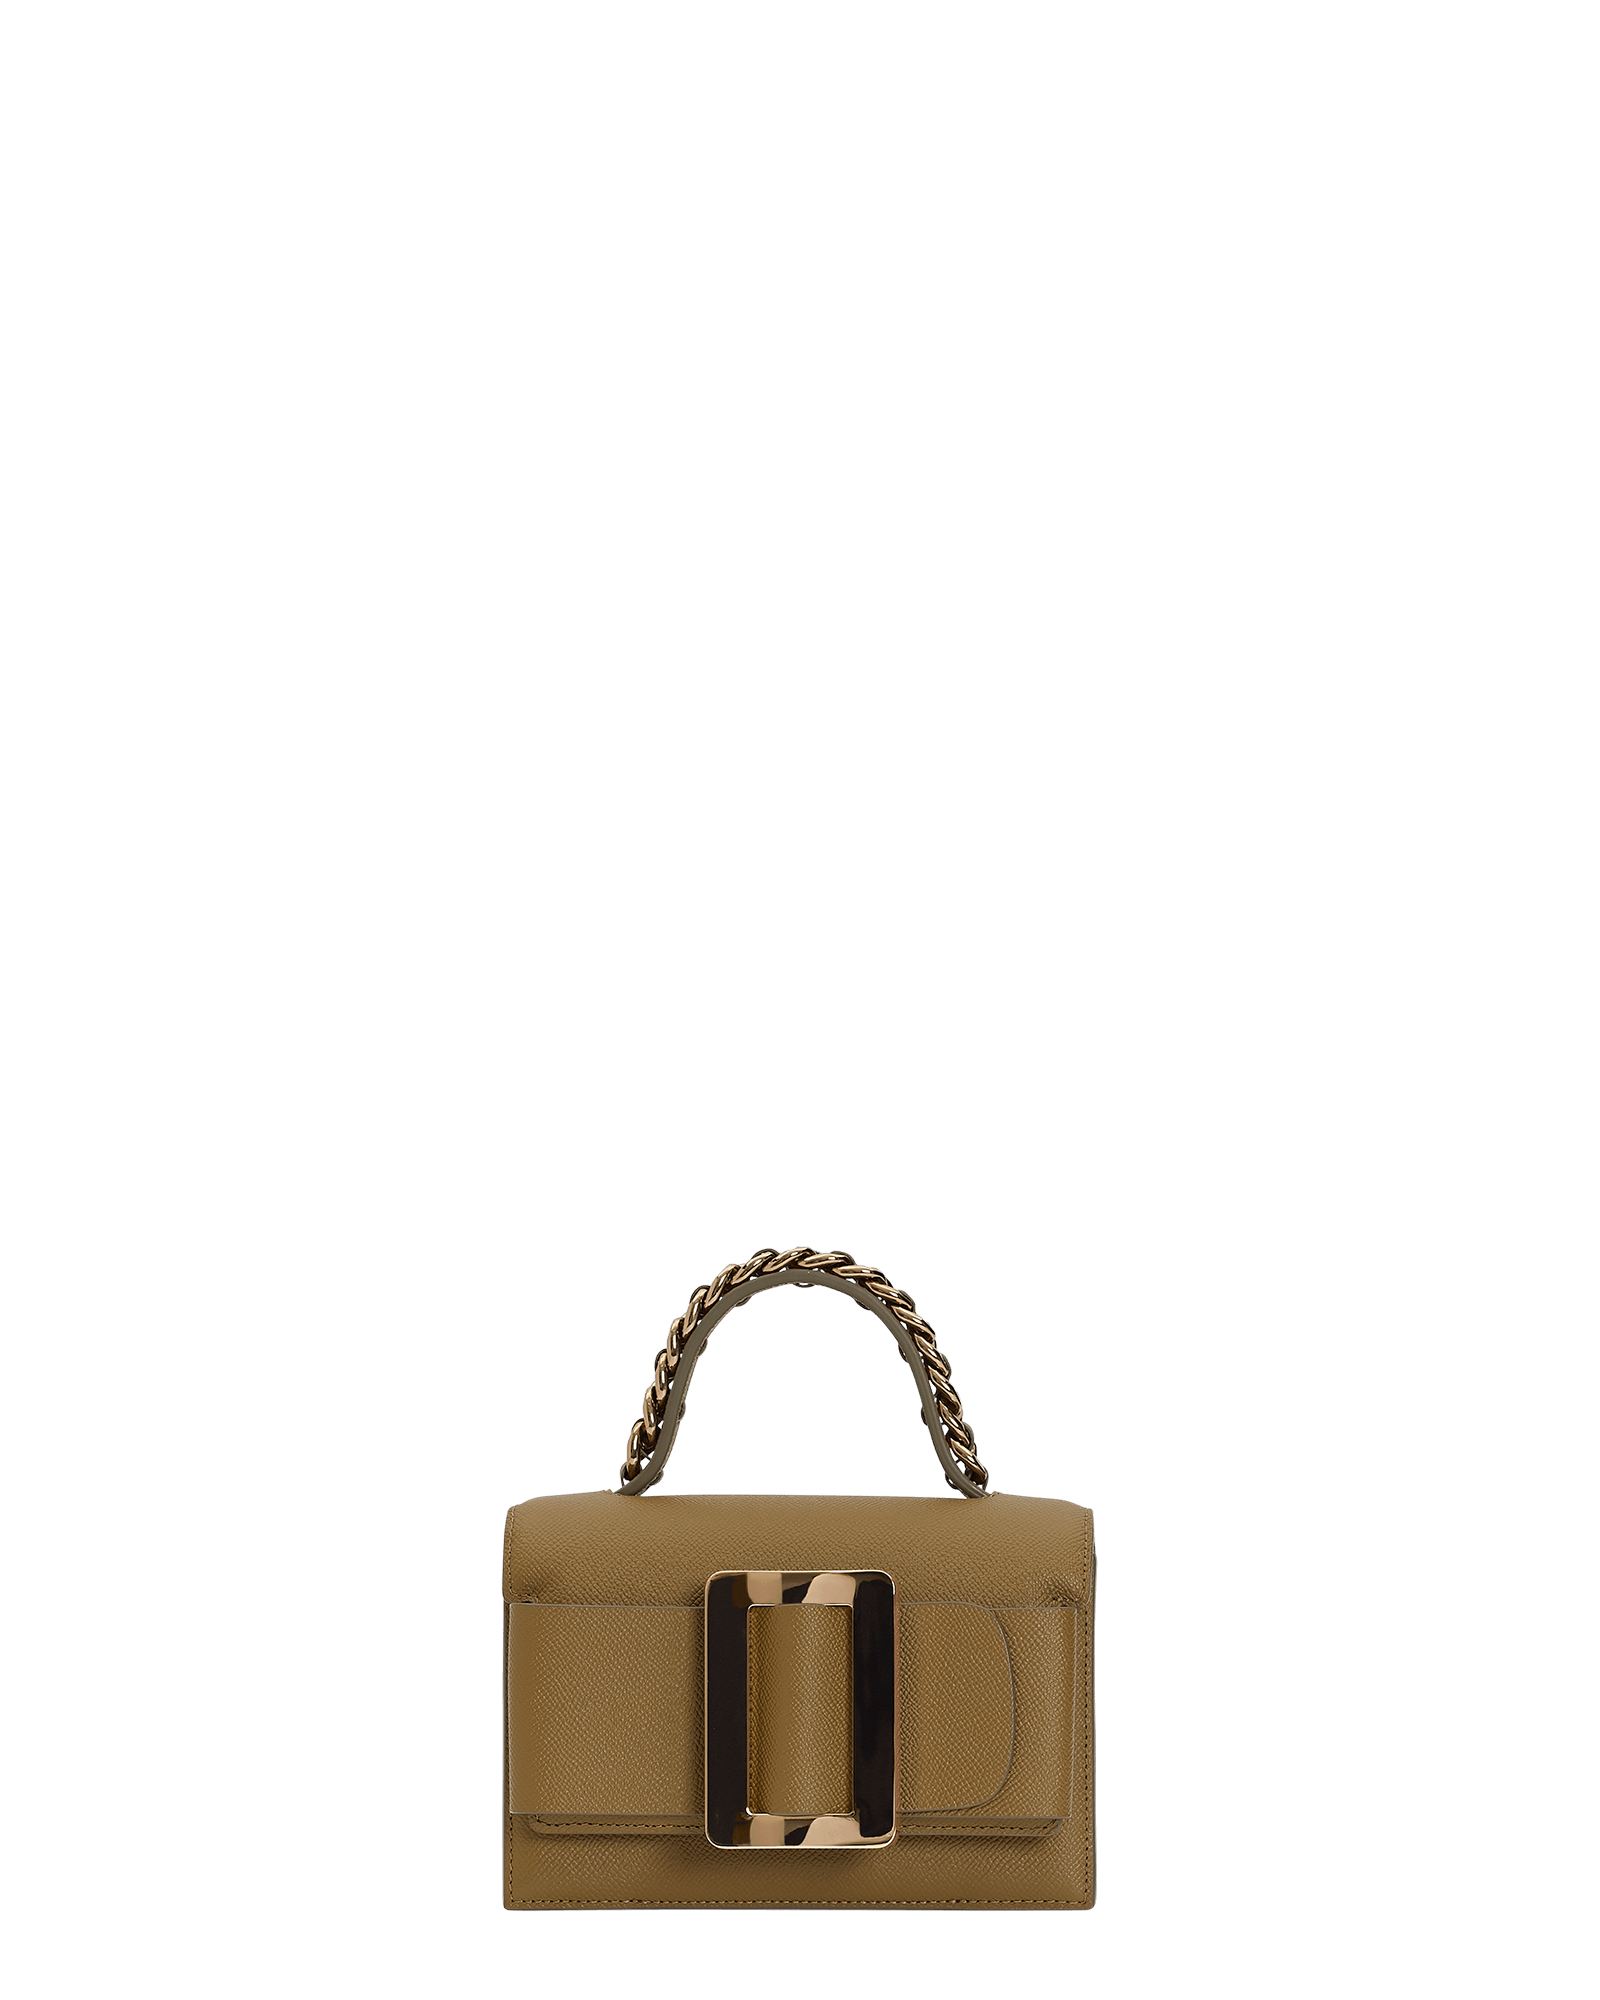 MOTHER OF PEARL Inlaid Brass handcrafted handbag, Wedding Designer clutch  purse | eBay